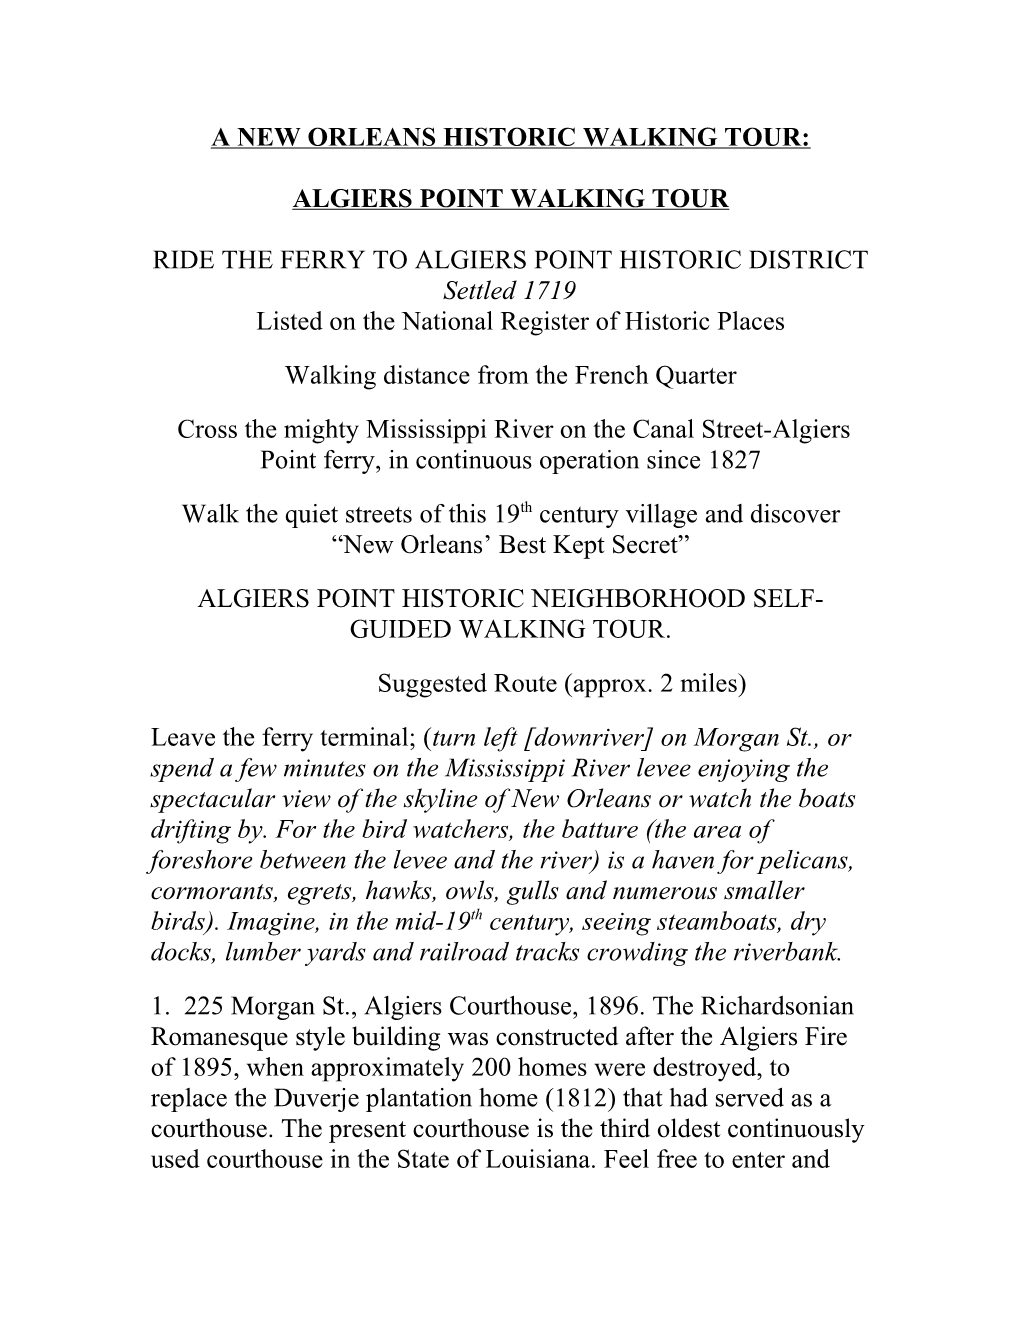 Algiers Point Walking Tour